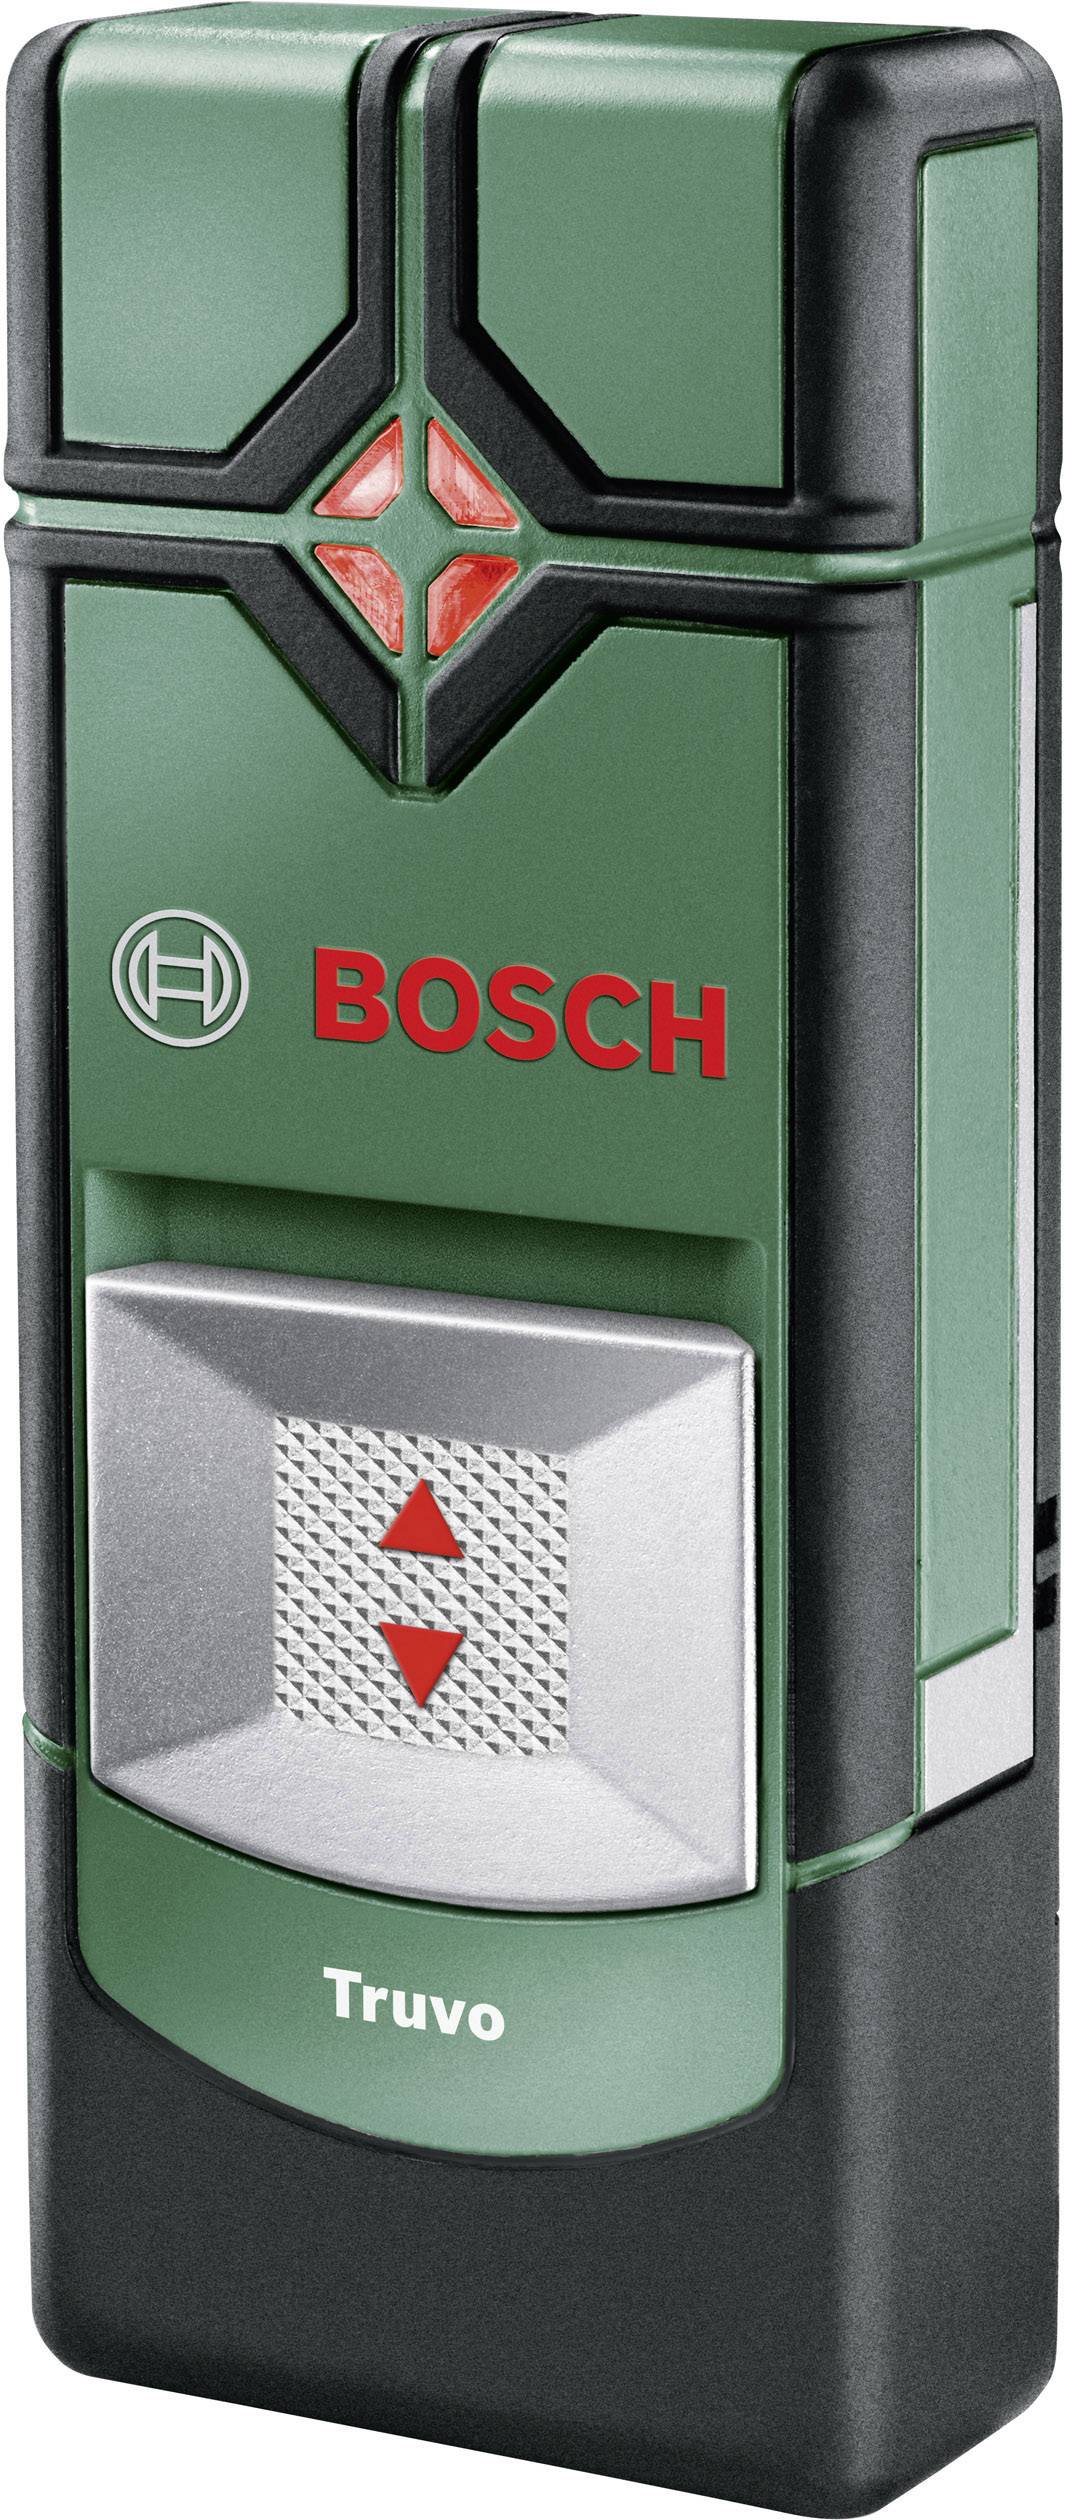 Детектор бош. Детектор Bosch Truvo. Bosch Truvo 0603681221. Bosch цифровой детектор Truvo. Детектор скрытой проводки бош.